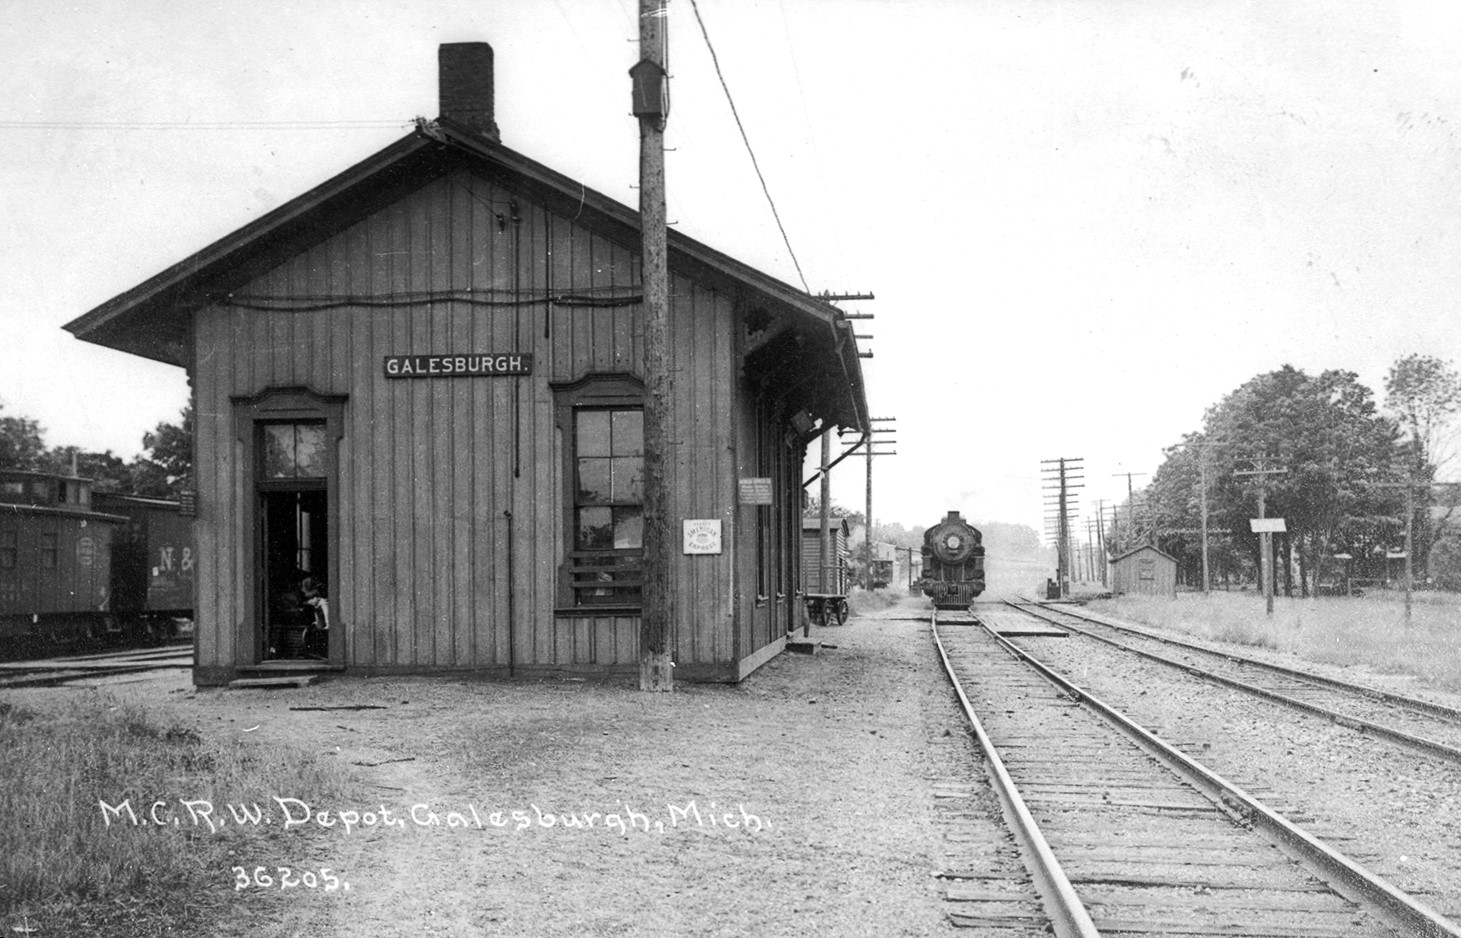 MC Galesburg depot